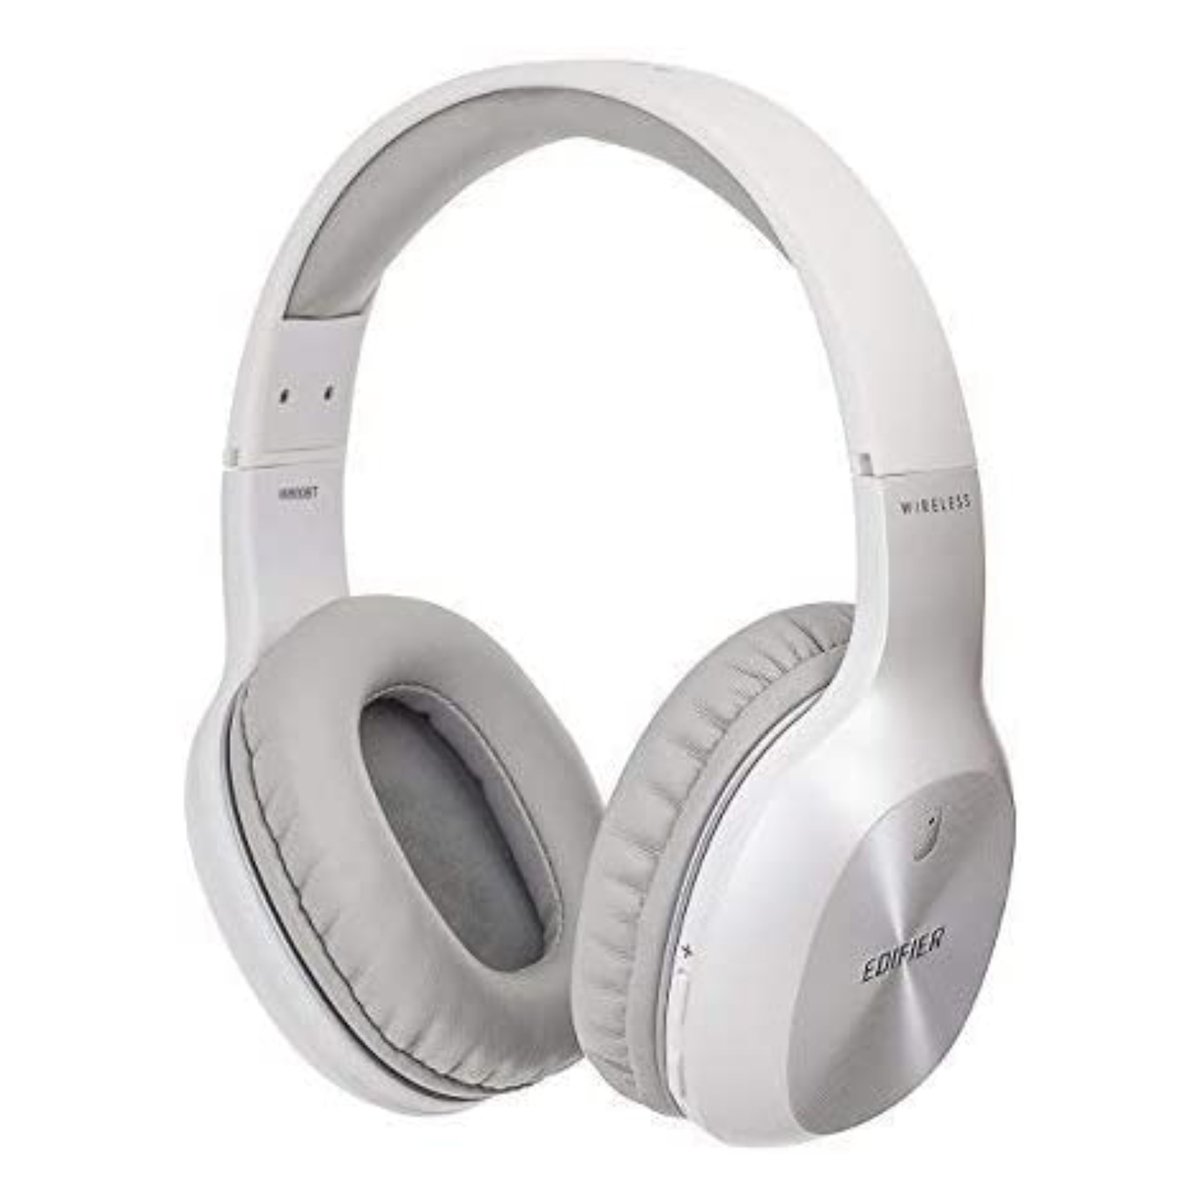 Edifier Bluetooth Wireless Headset W800BT White